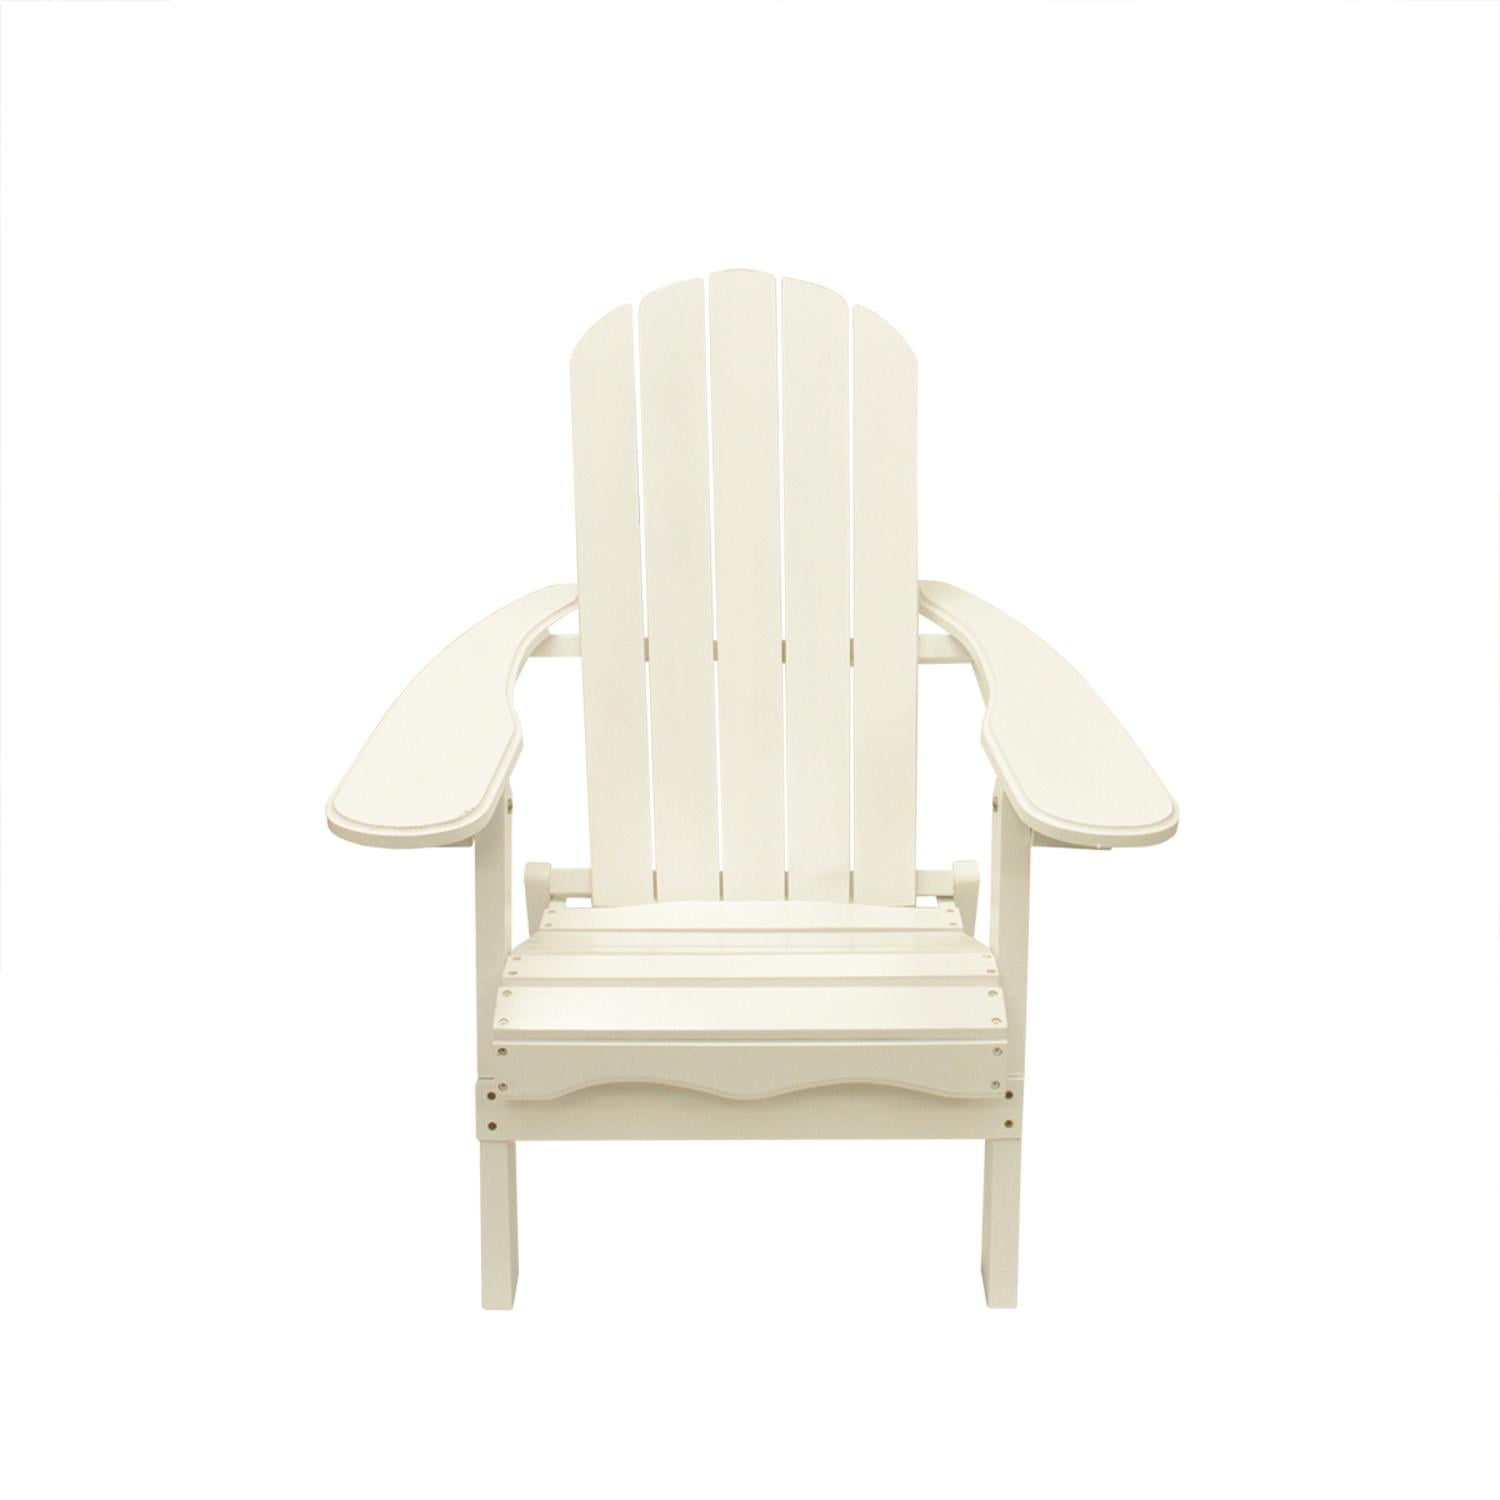 40" White Wooden Folding Outdoor Patio Adirondack Chair ...